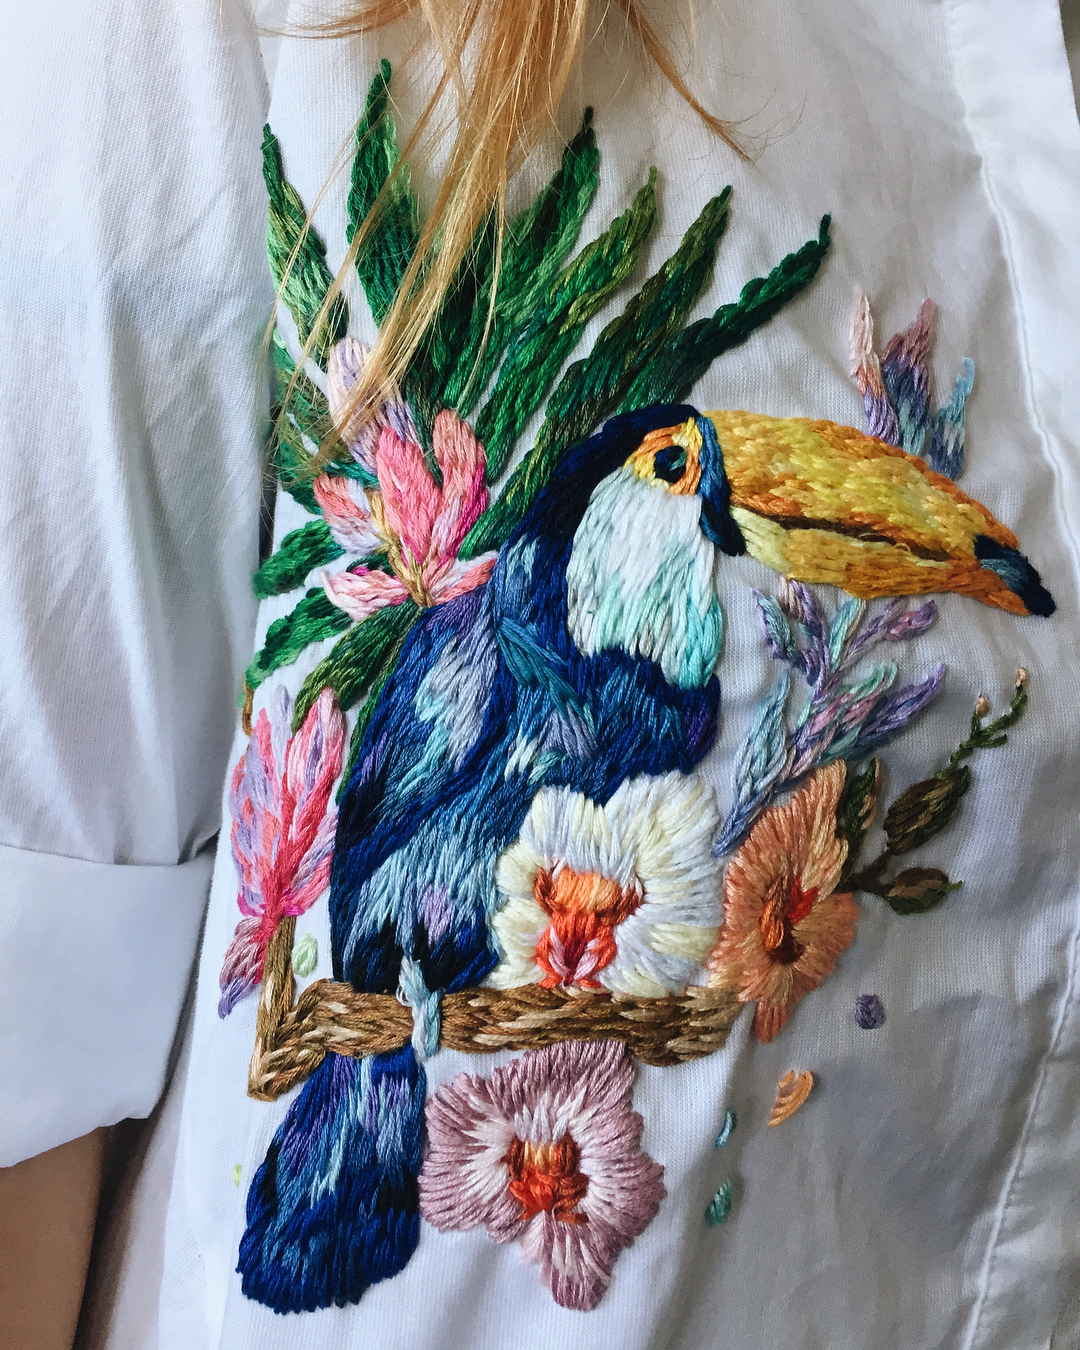 Custom embroidered clothing by Lisa Smirova